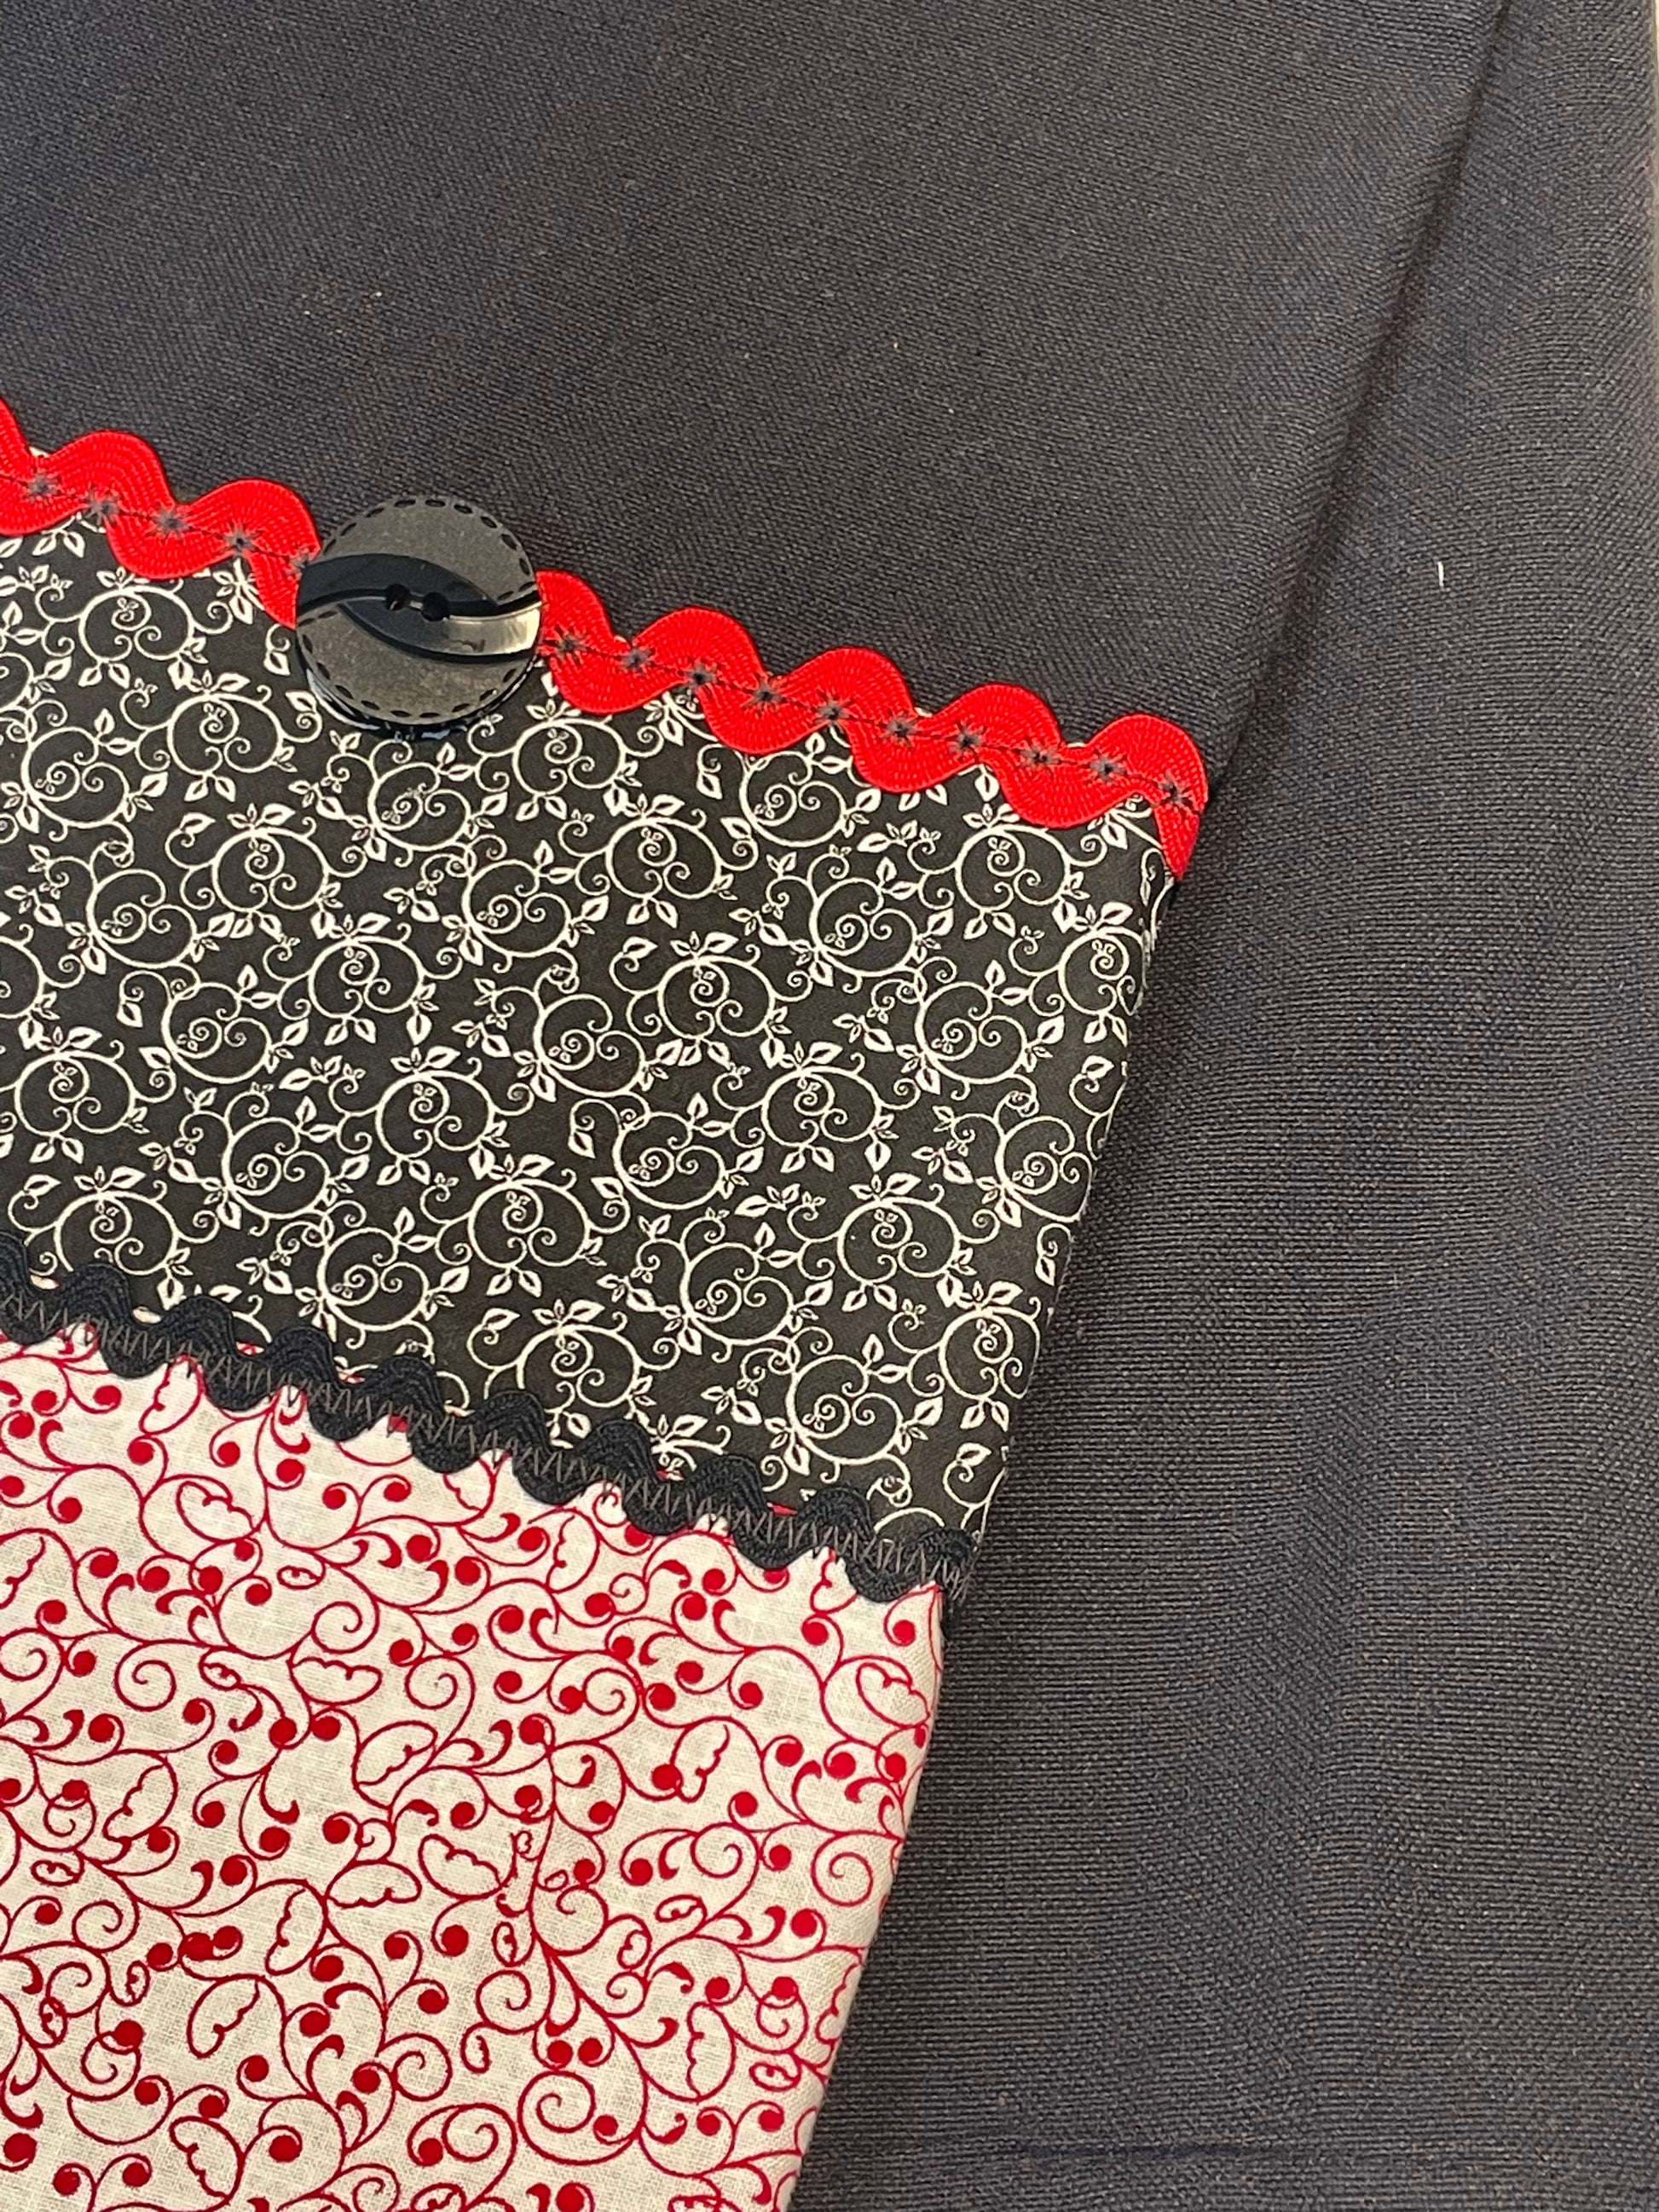 Red And Black Handmade Dish Towel | Kitchen Tea Towel - Home Stitchery Decor